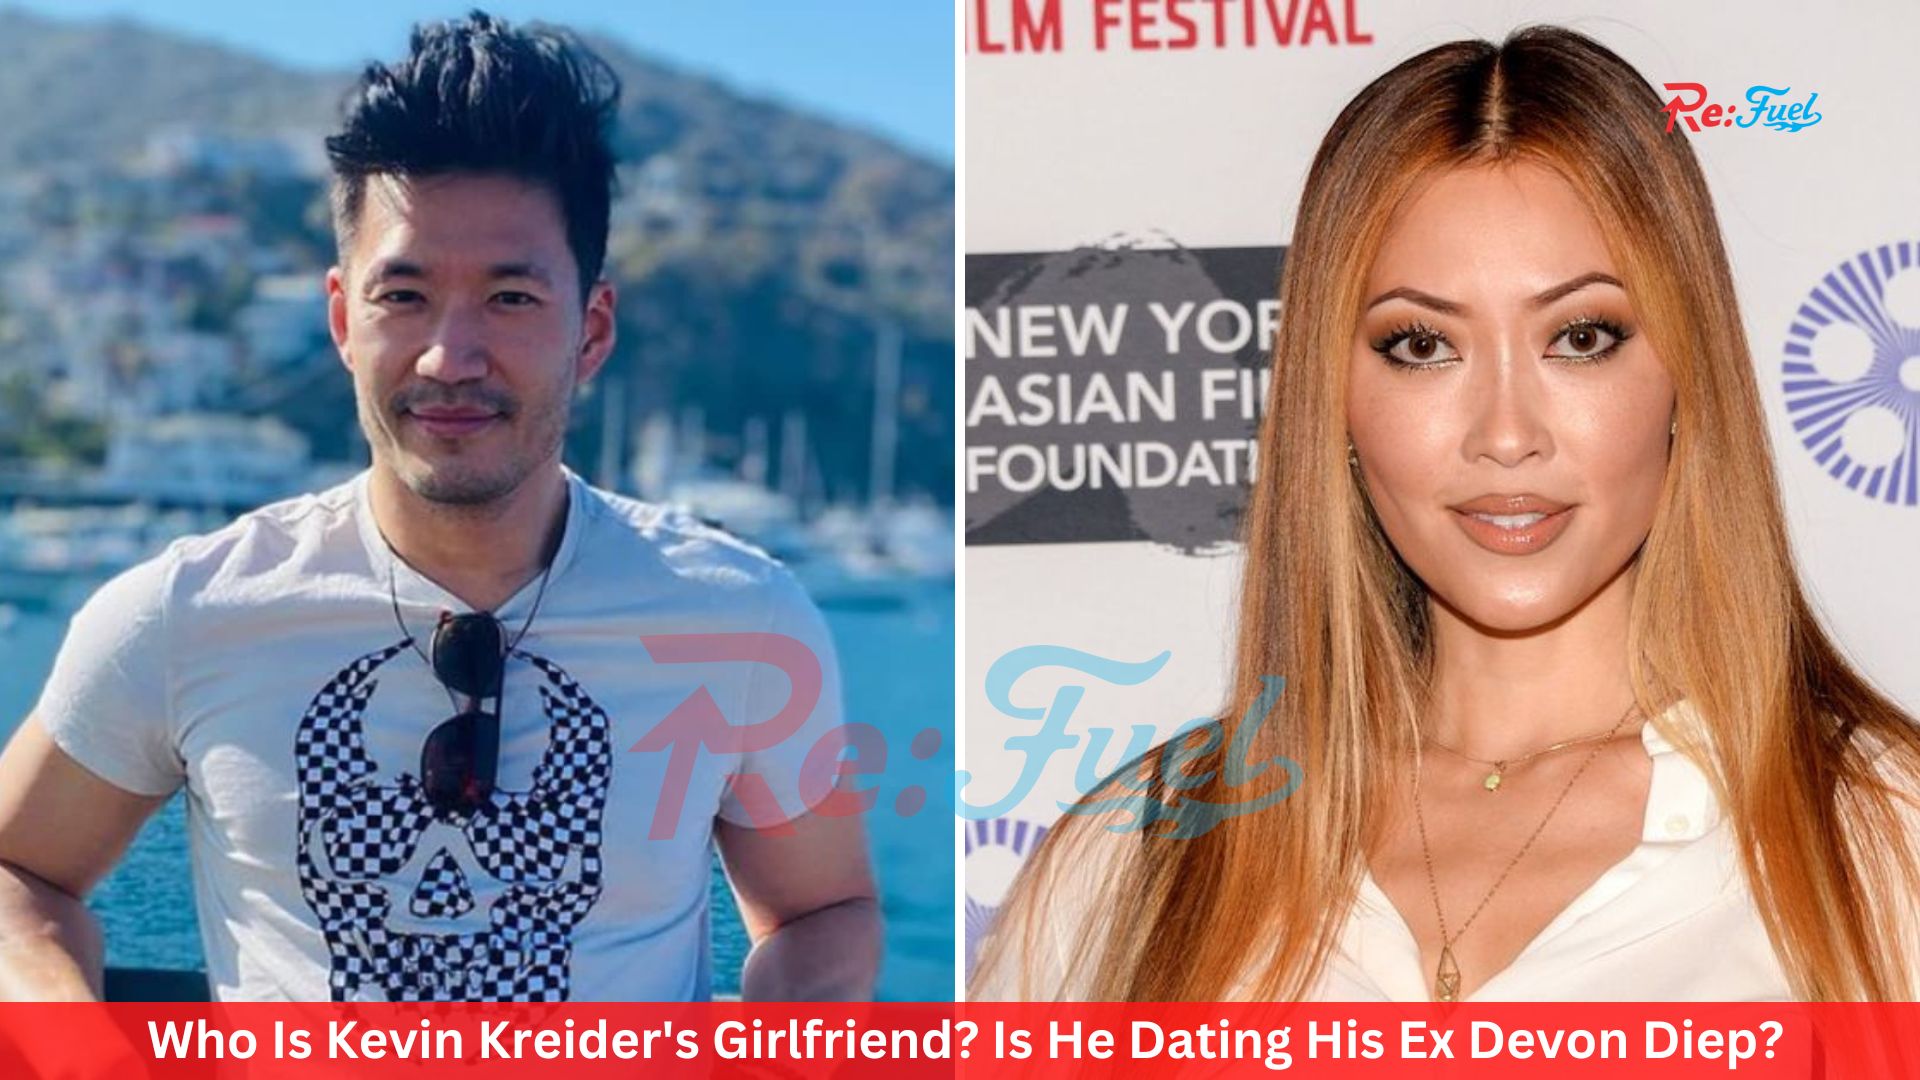 Who Is Kevin Kreider's Girlfriend? Is He Dating His Ex Devon Diep?